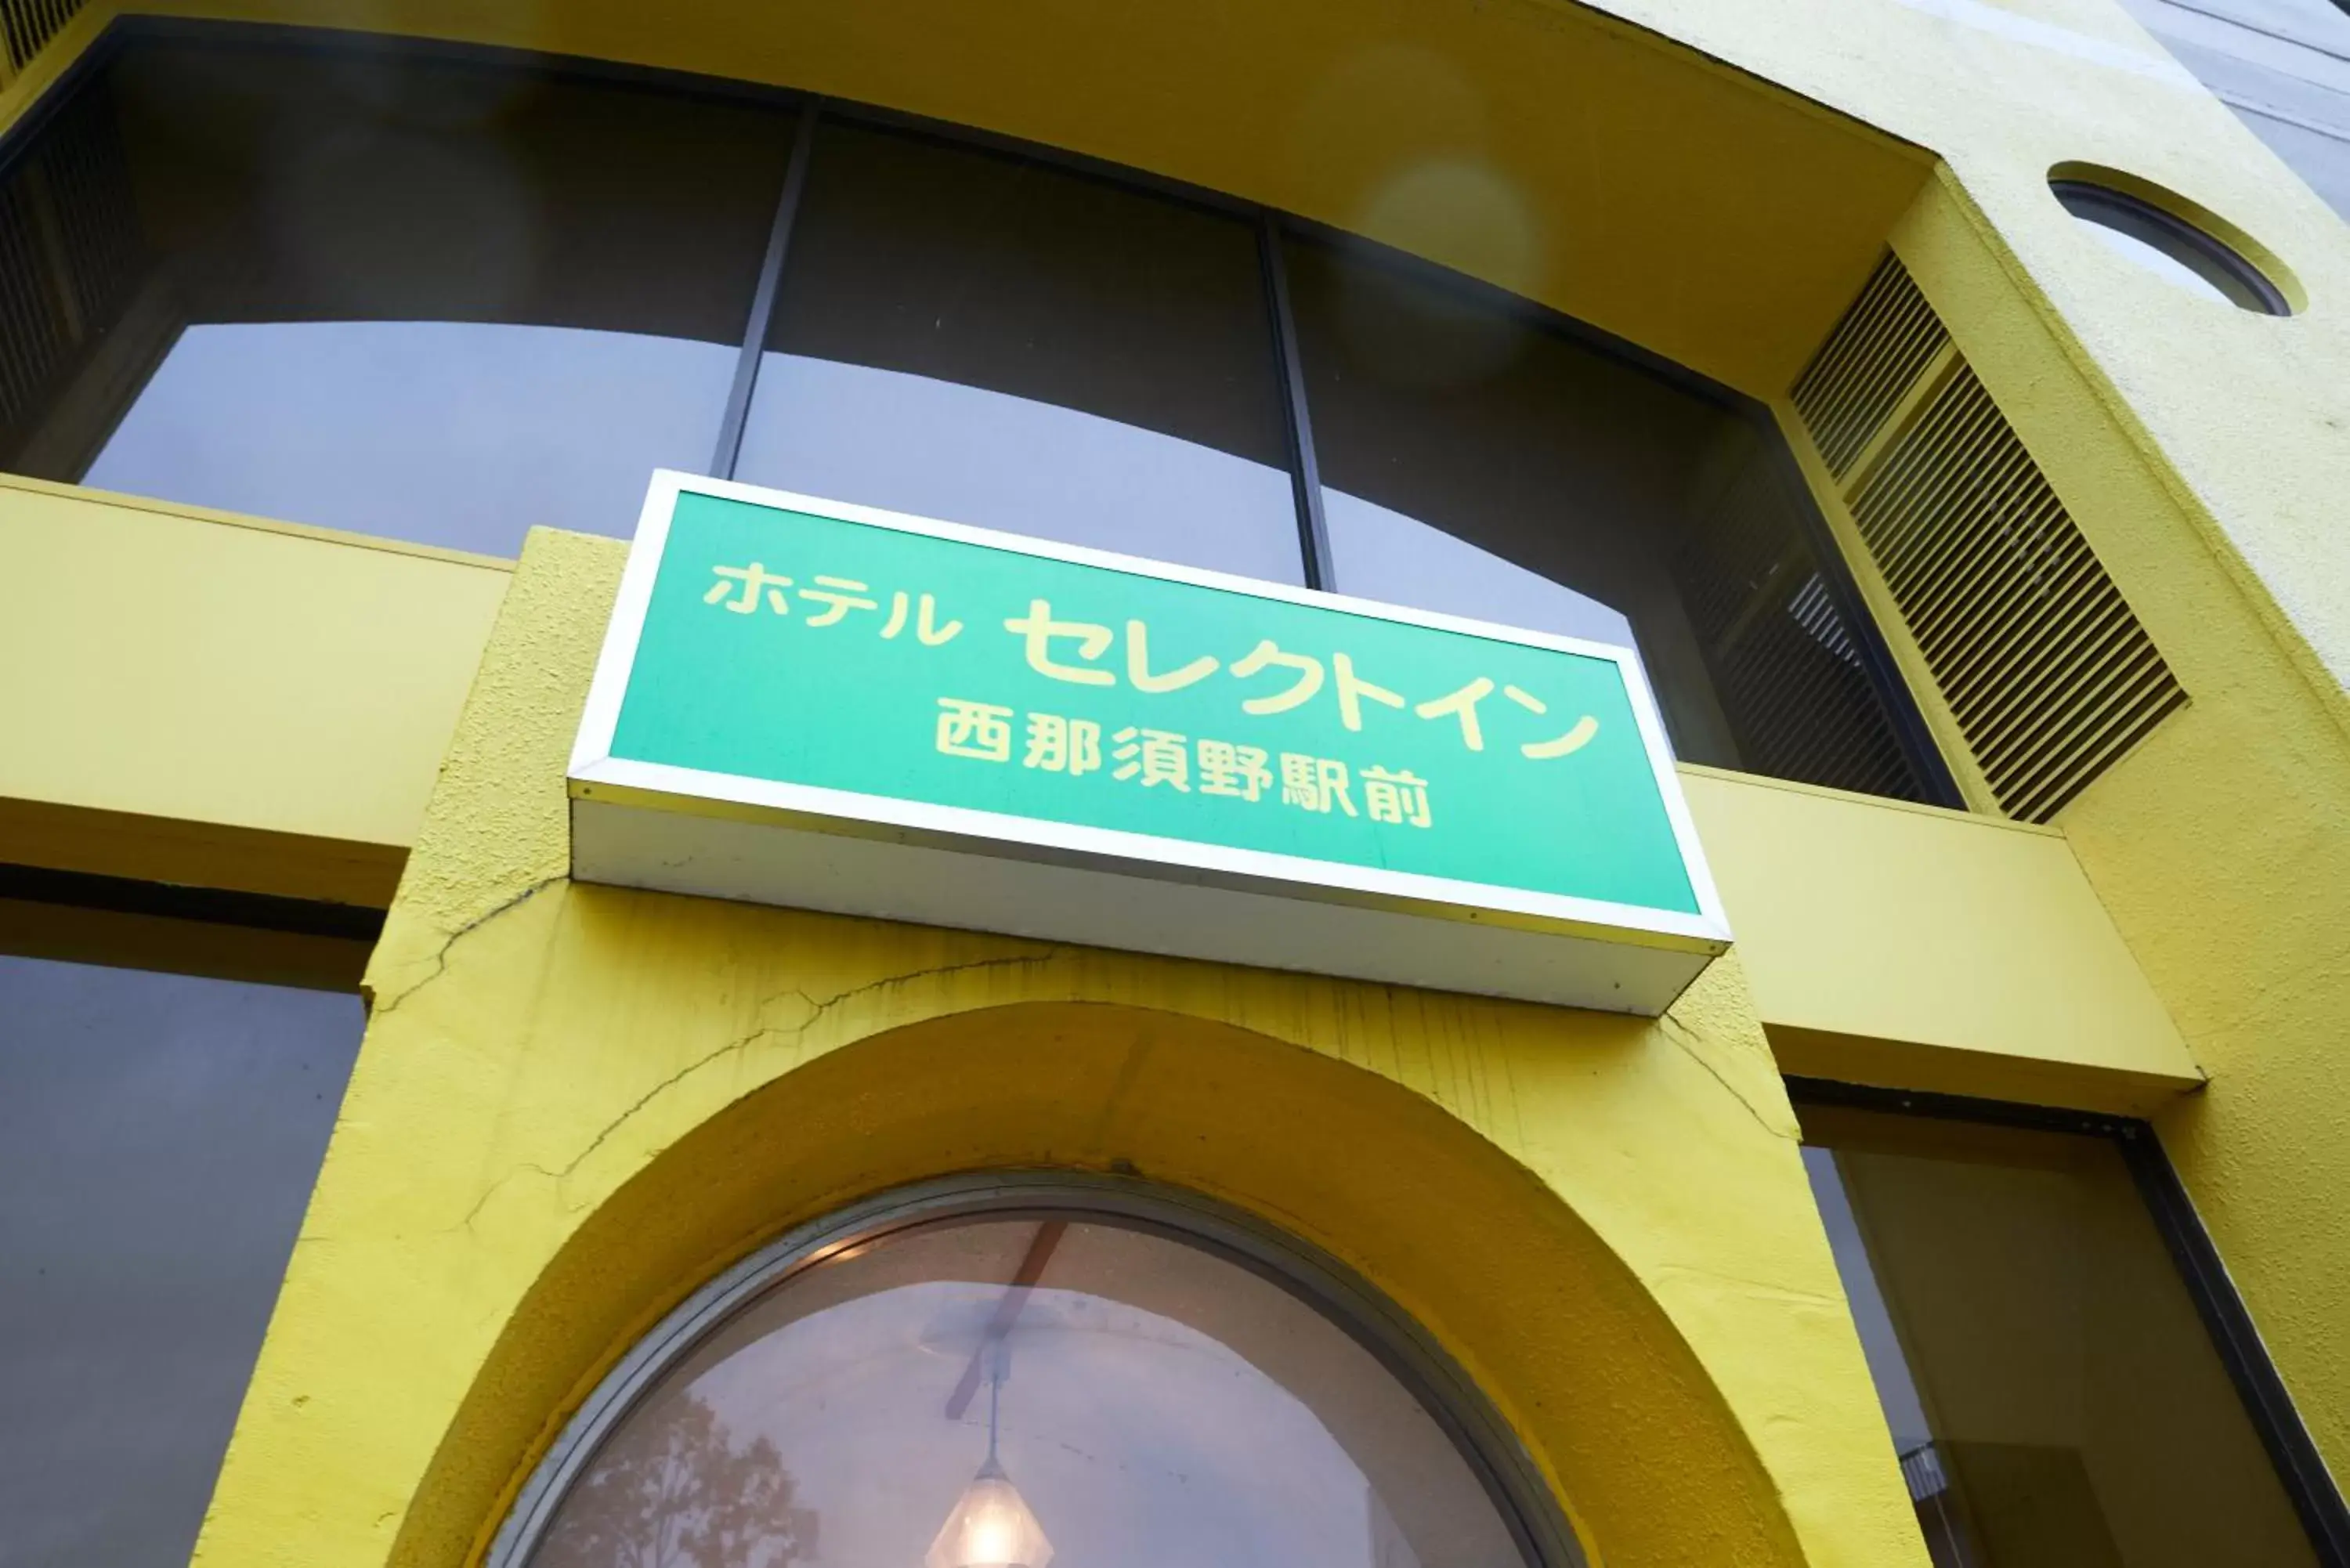 Property logo or sign in Hotel Select Inn Nishinasuno